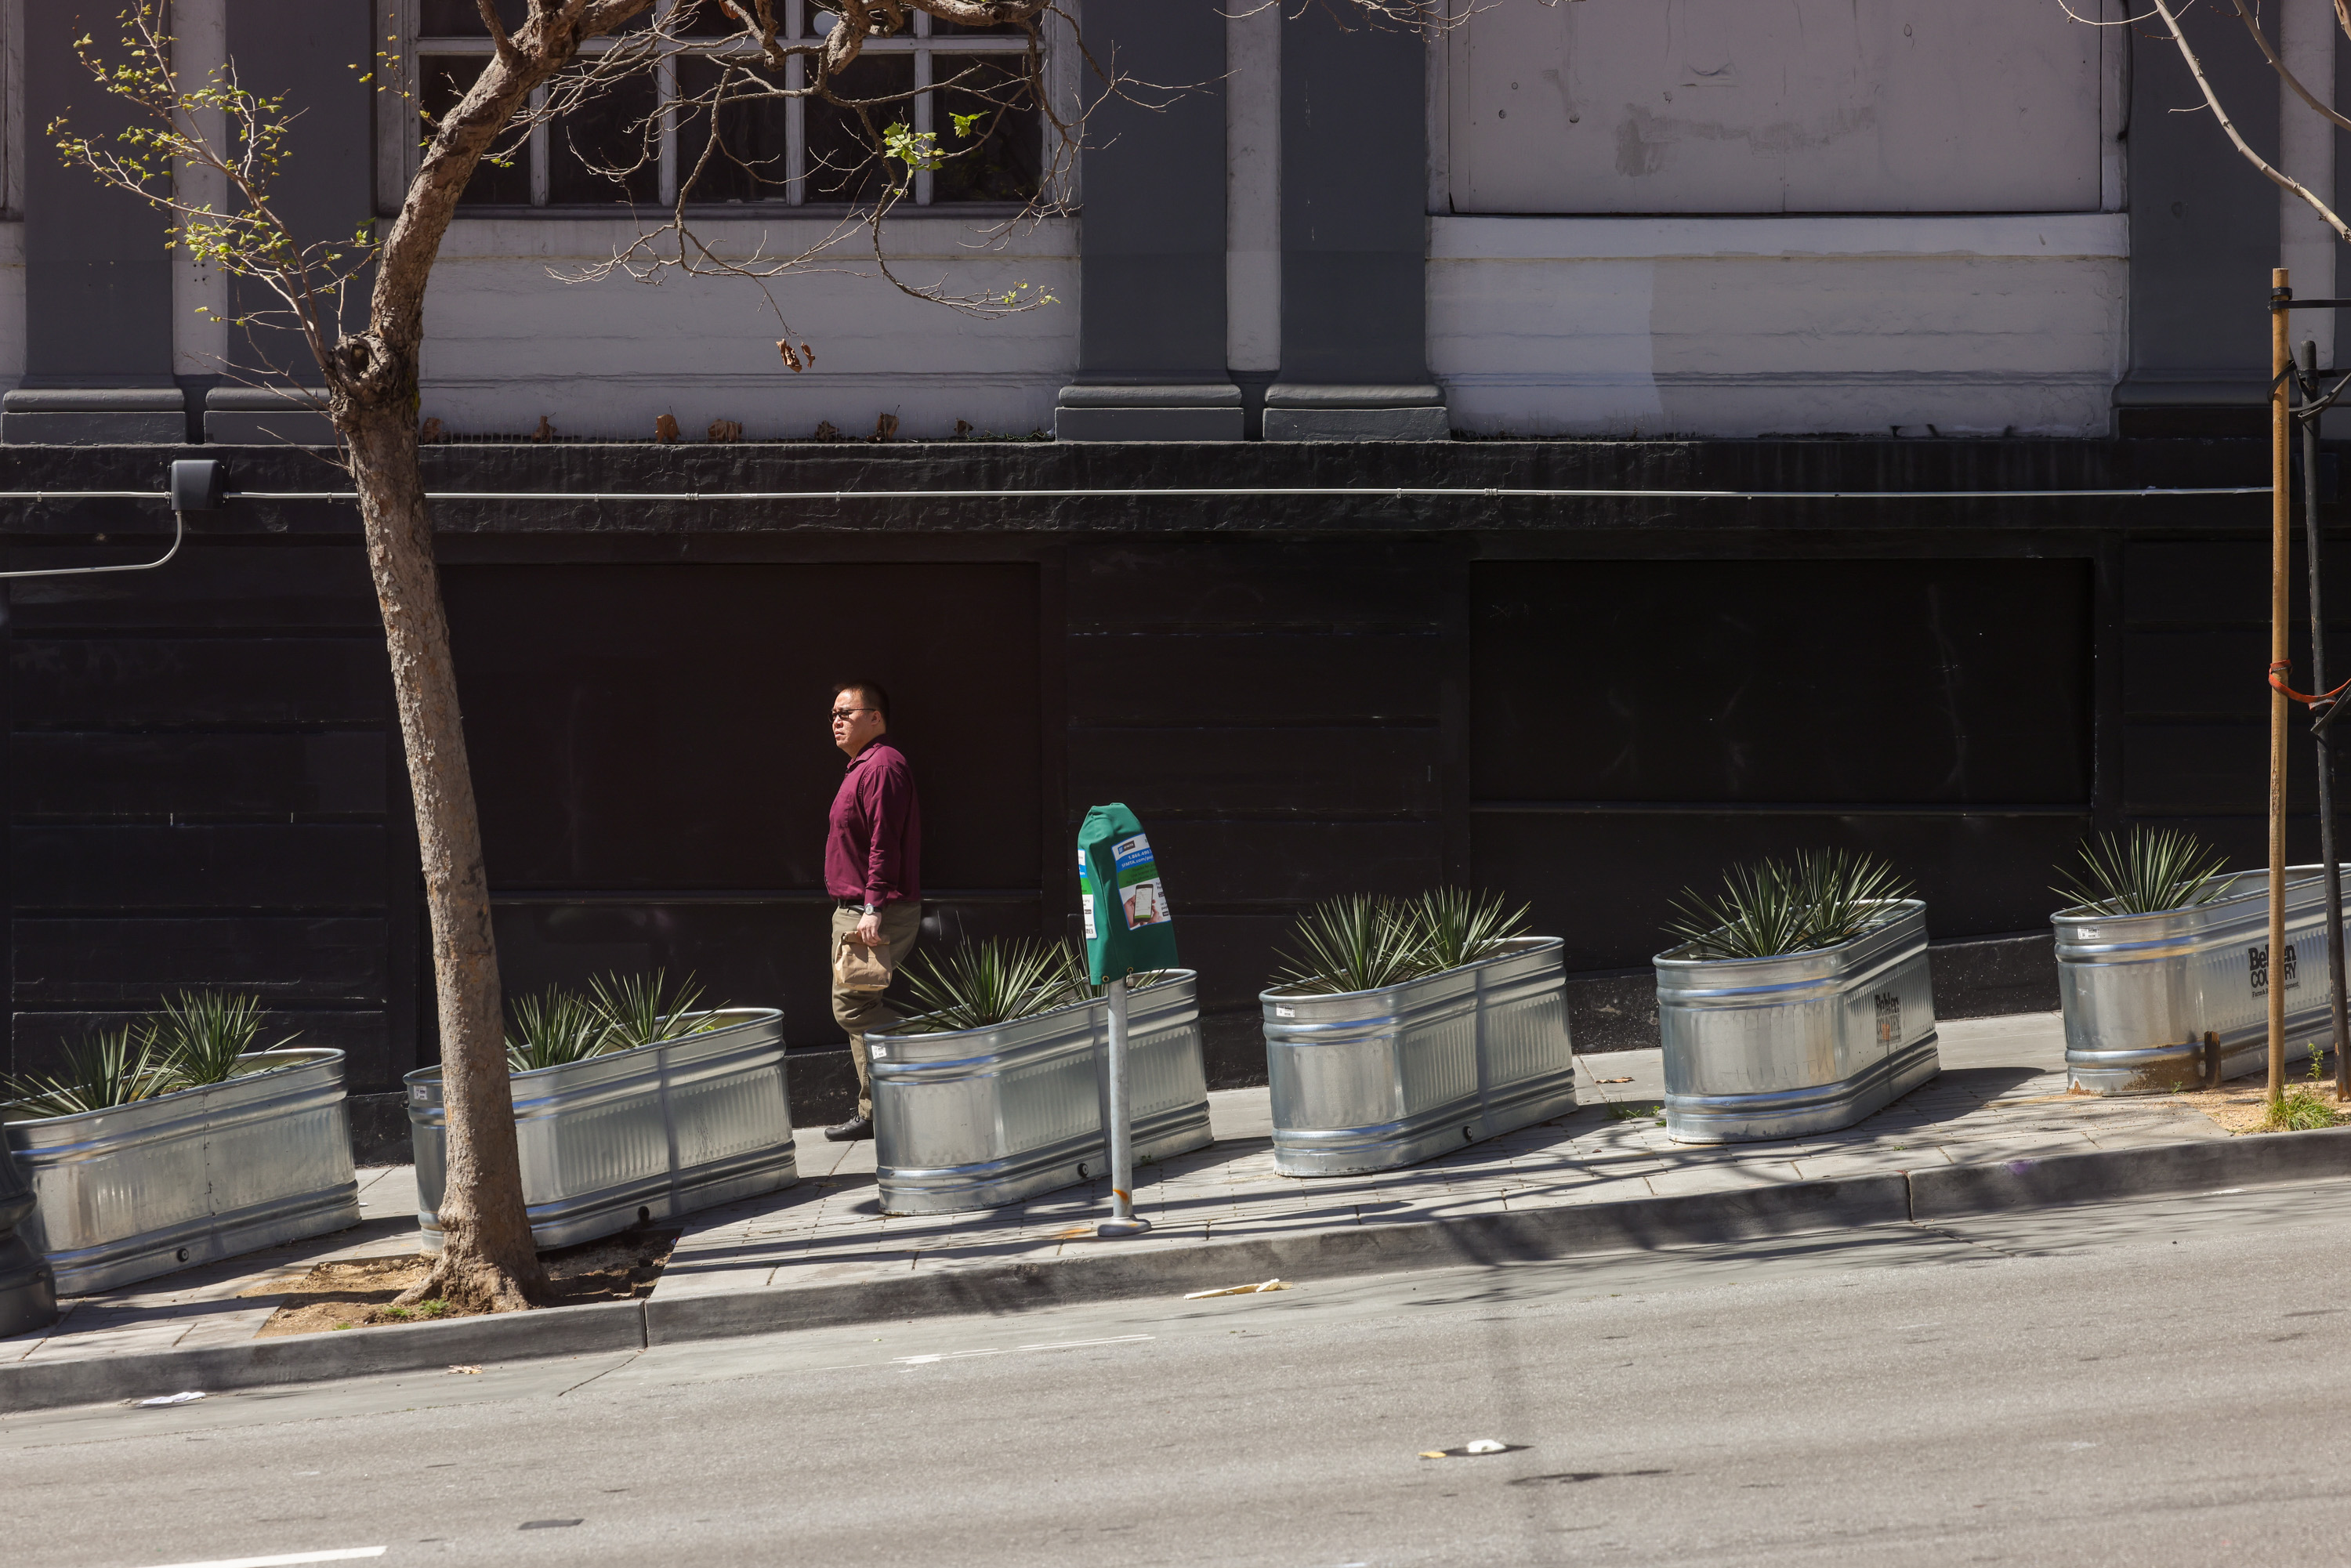 A person walks by metal planters on a sunlit urban sidewalk.